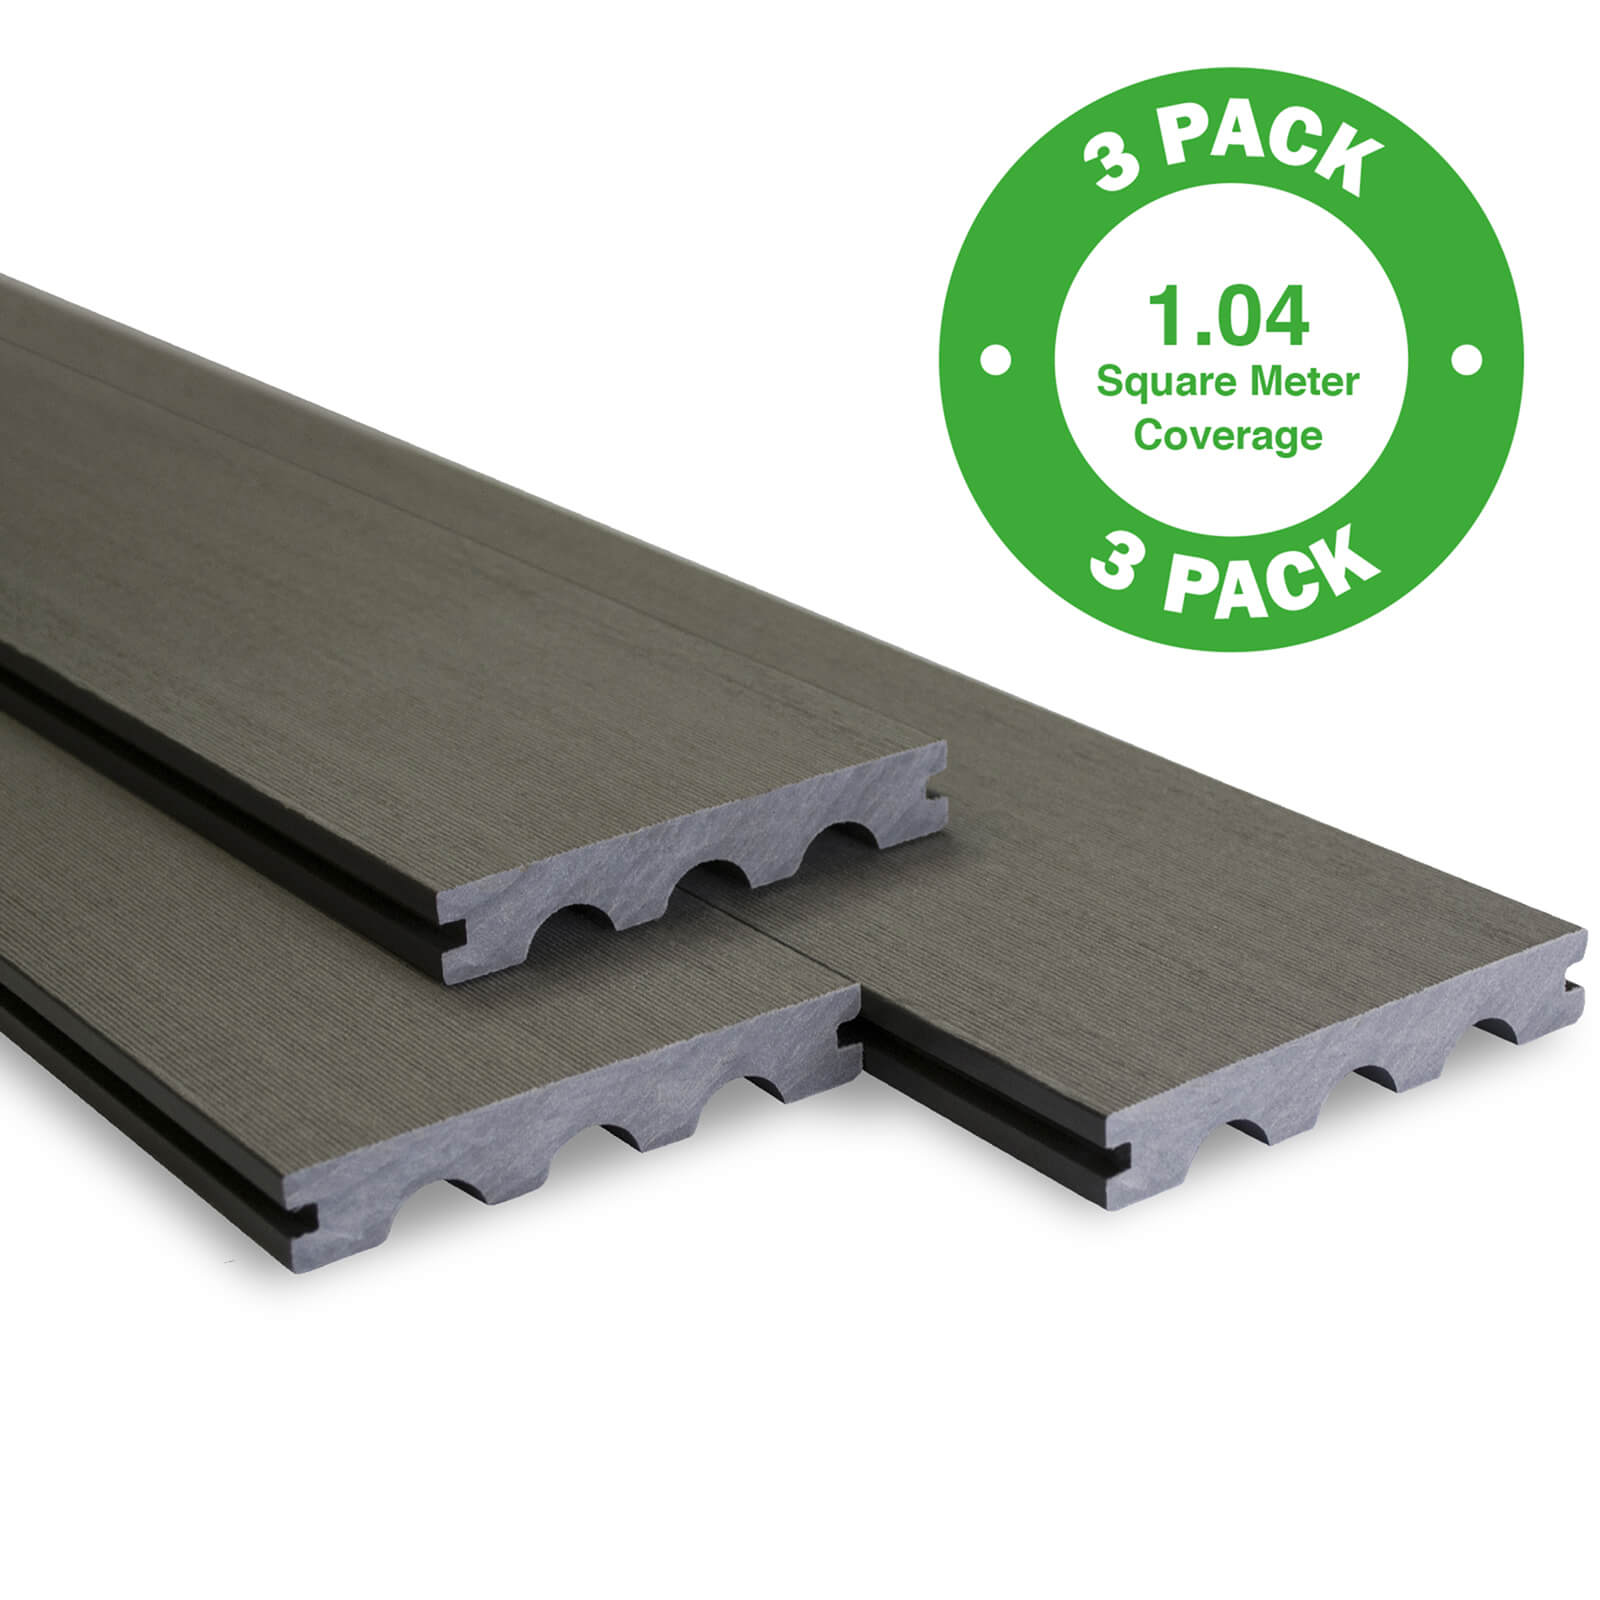 Photo of Bridge Board Composite Decking - 3 Pack - Grey - 1.04 M2